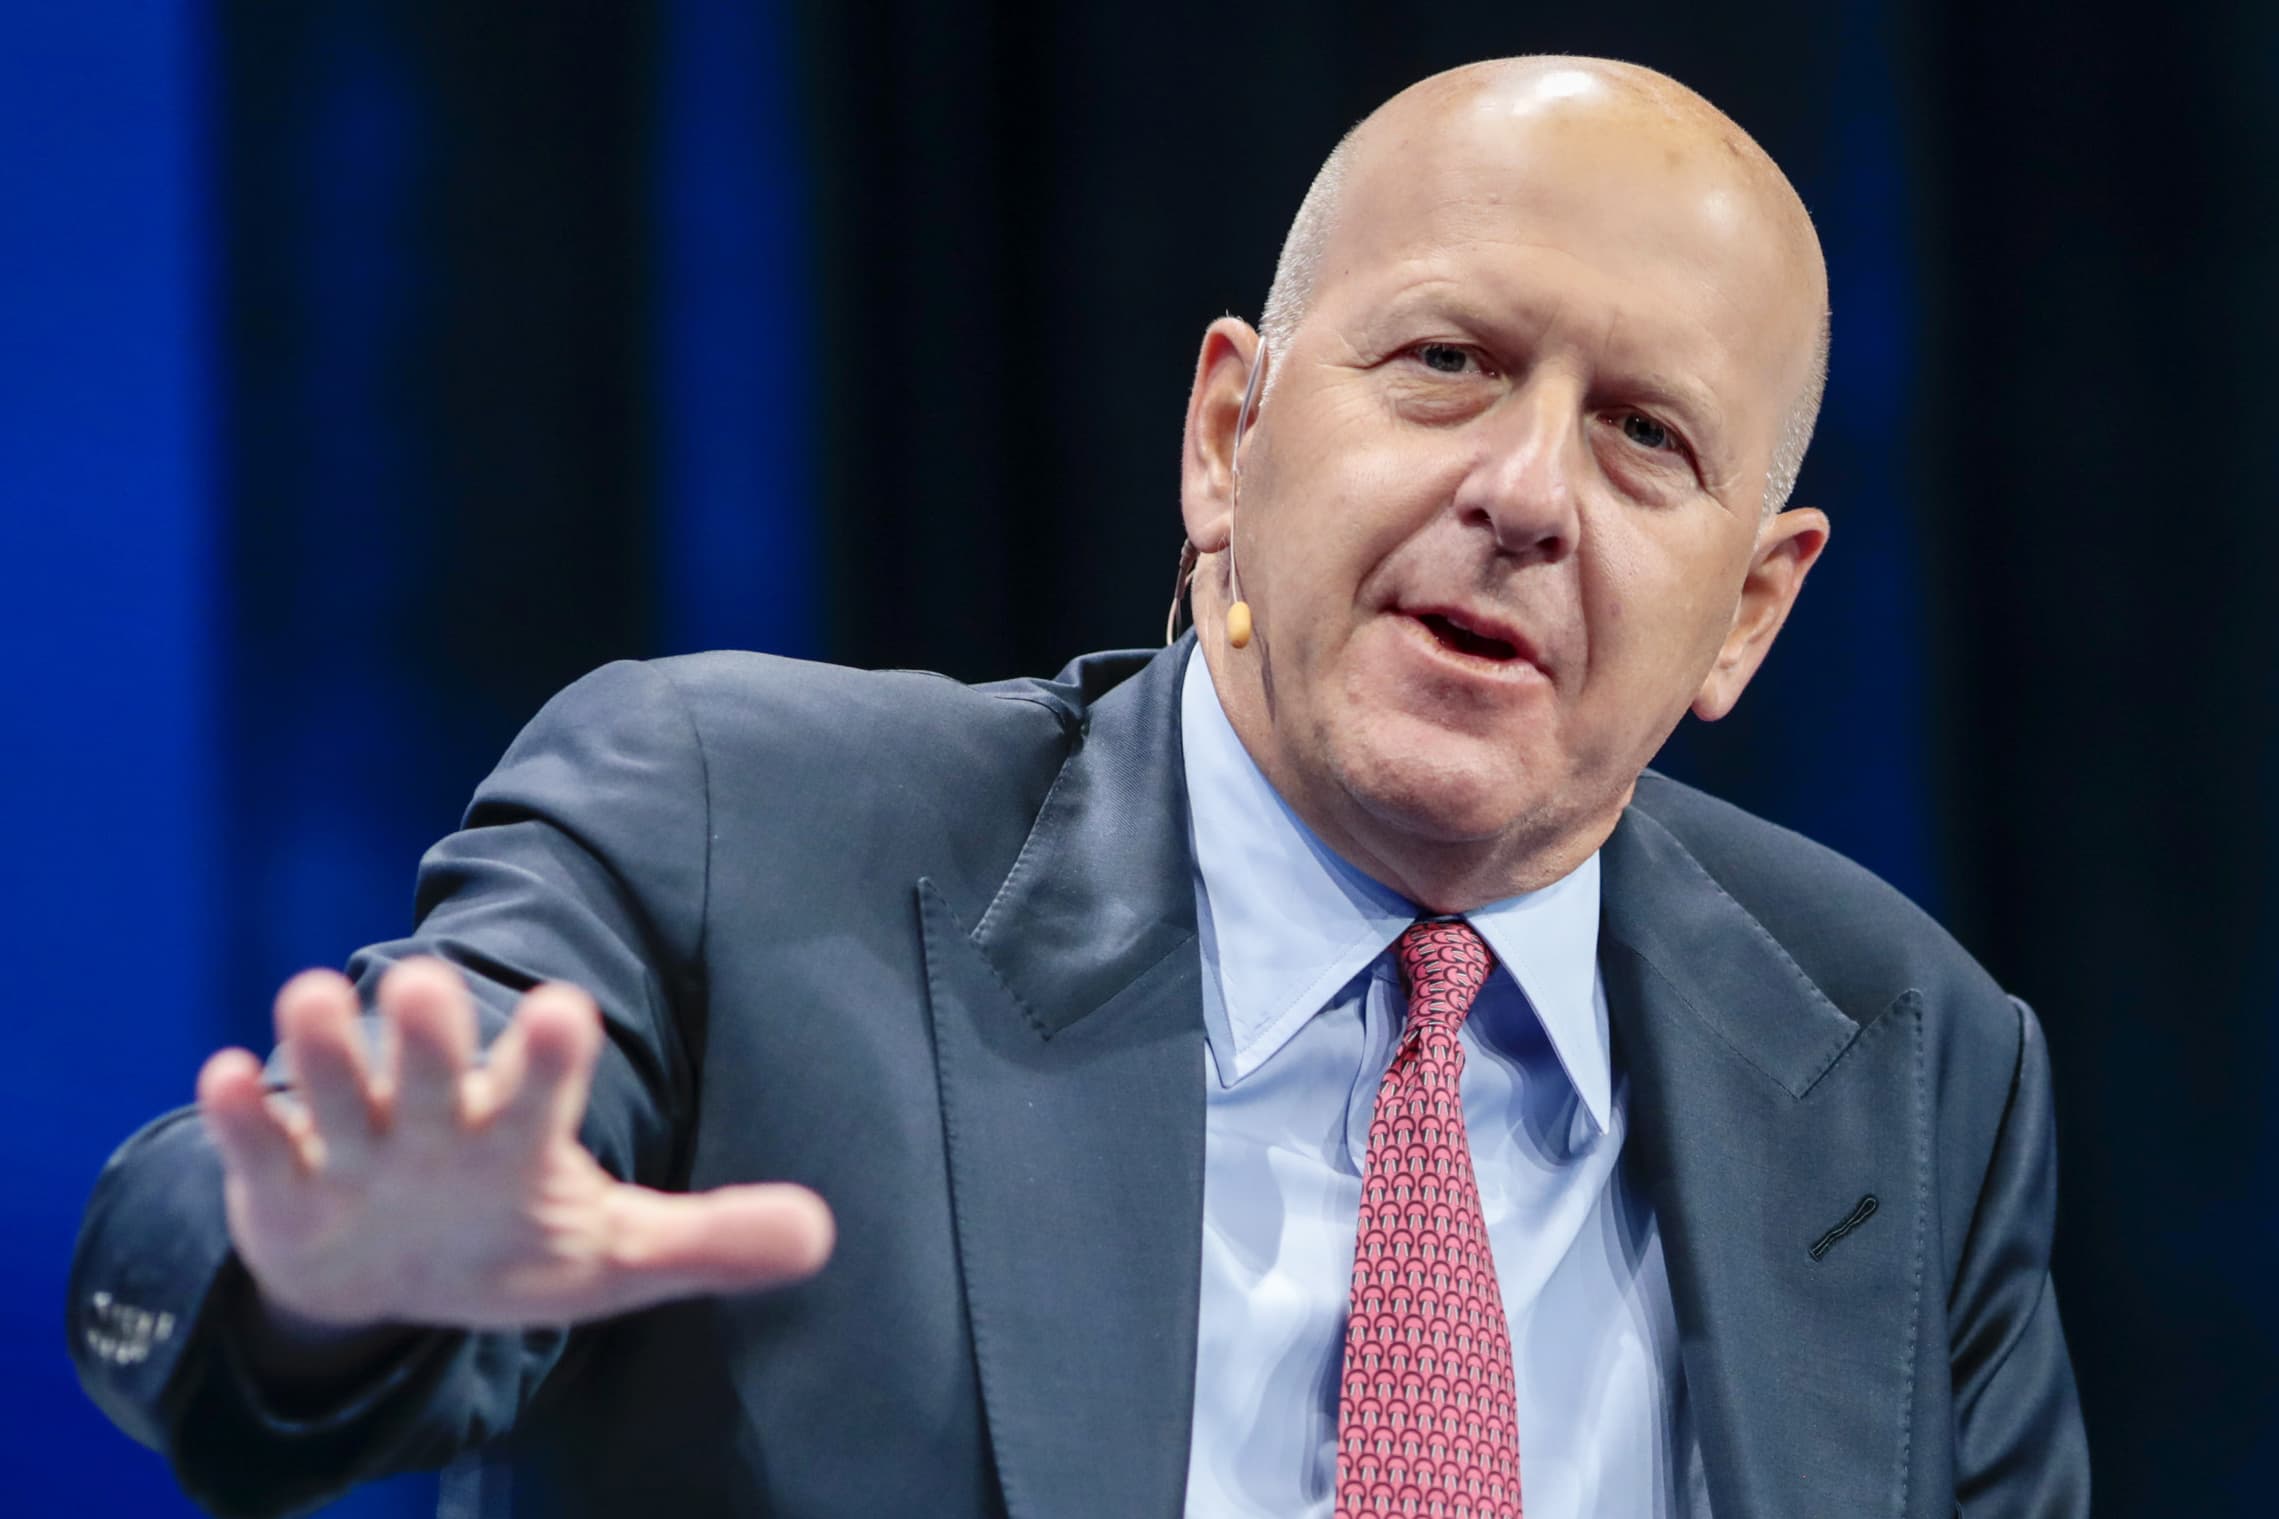 Goldman Sachs CEO Solomon considers homework an ‘aberration’